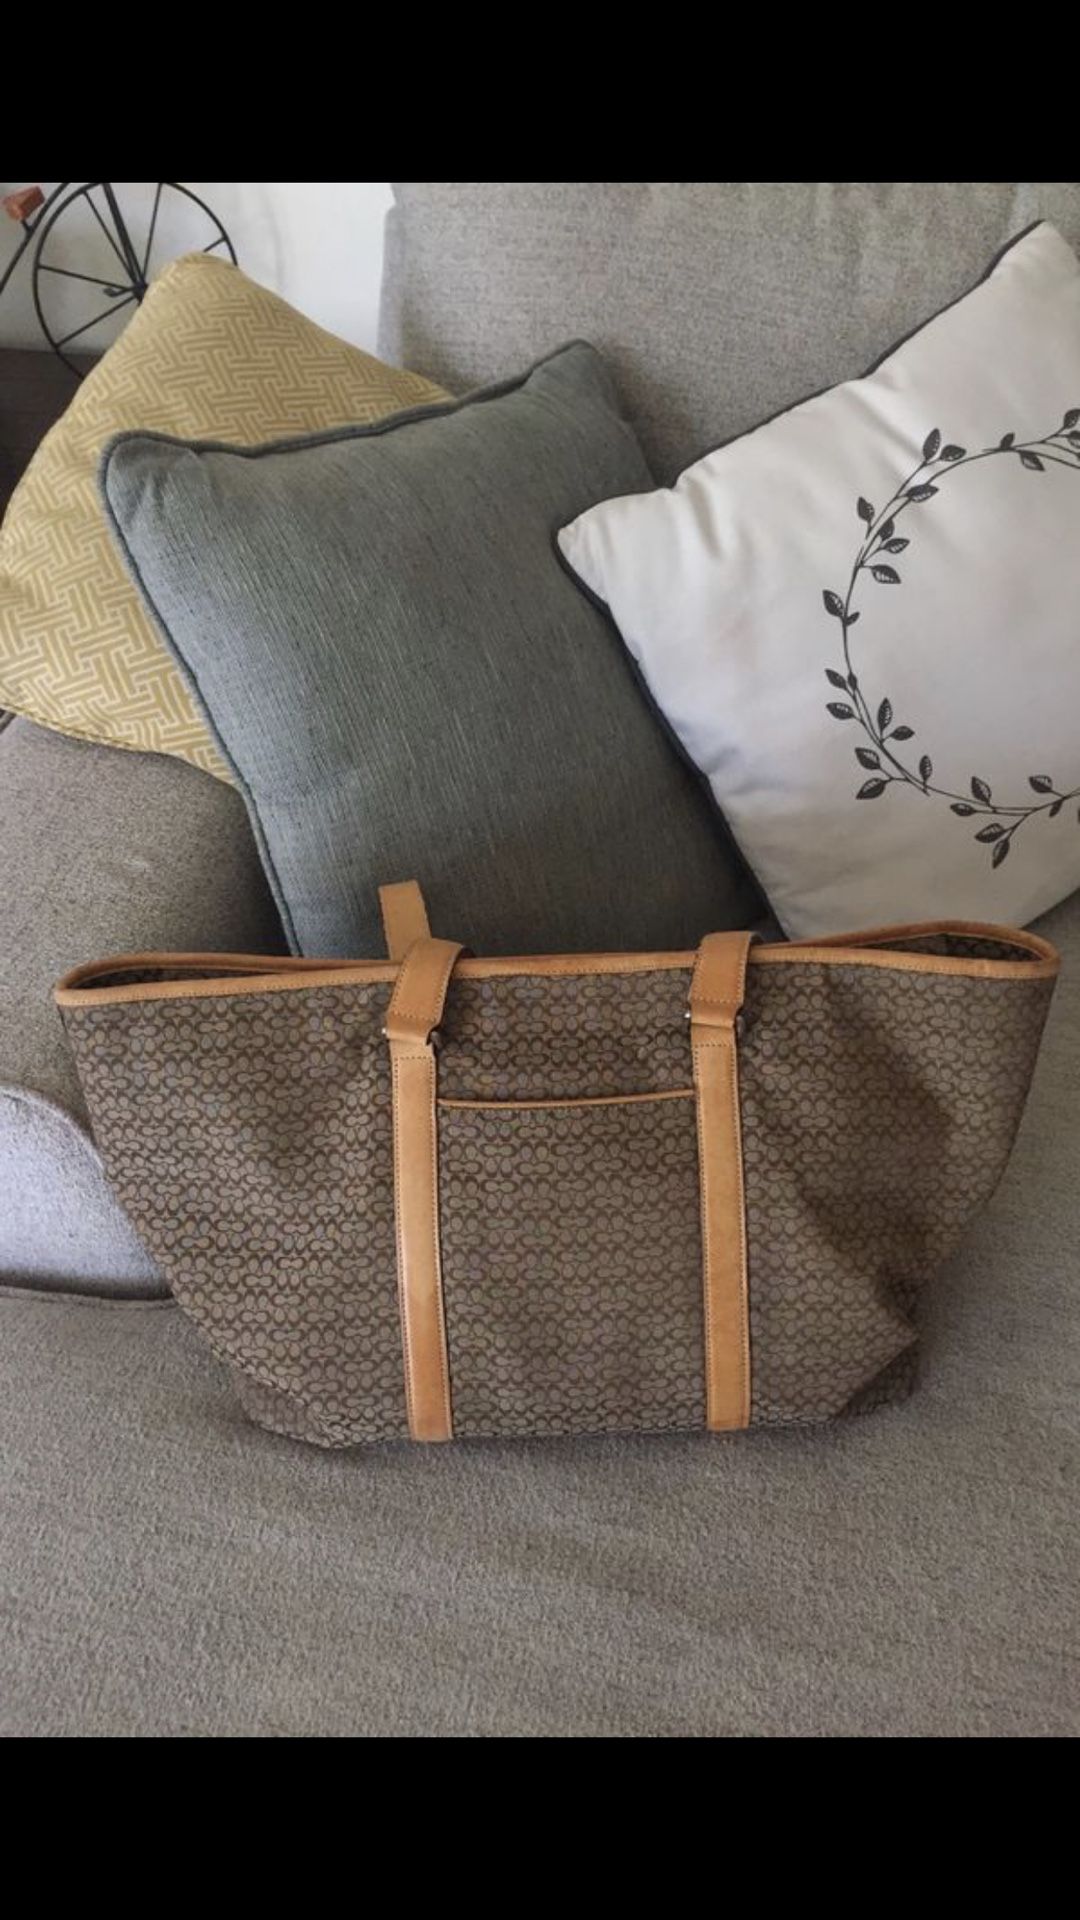 Coach diaper bag/ messenger bag/ or purse